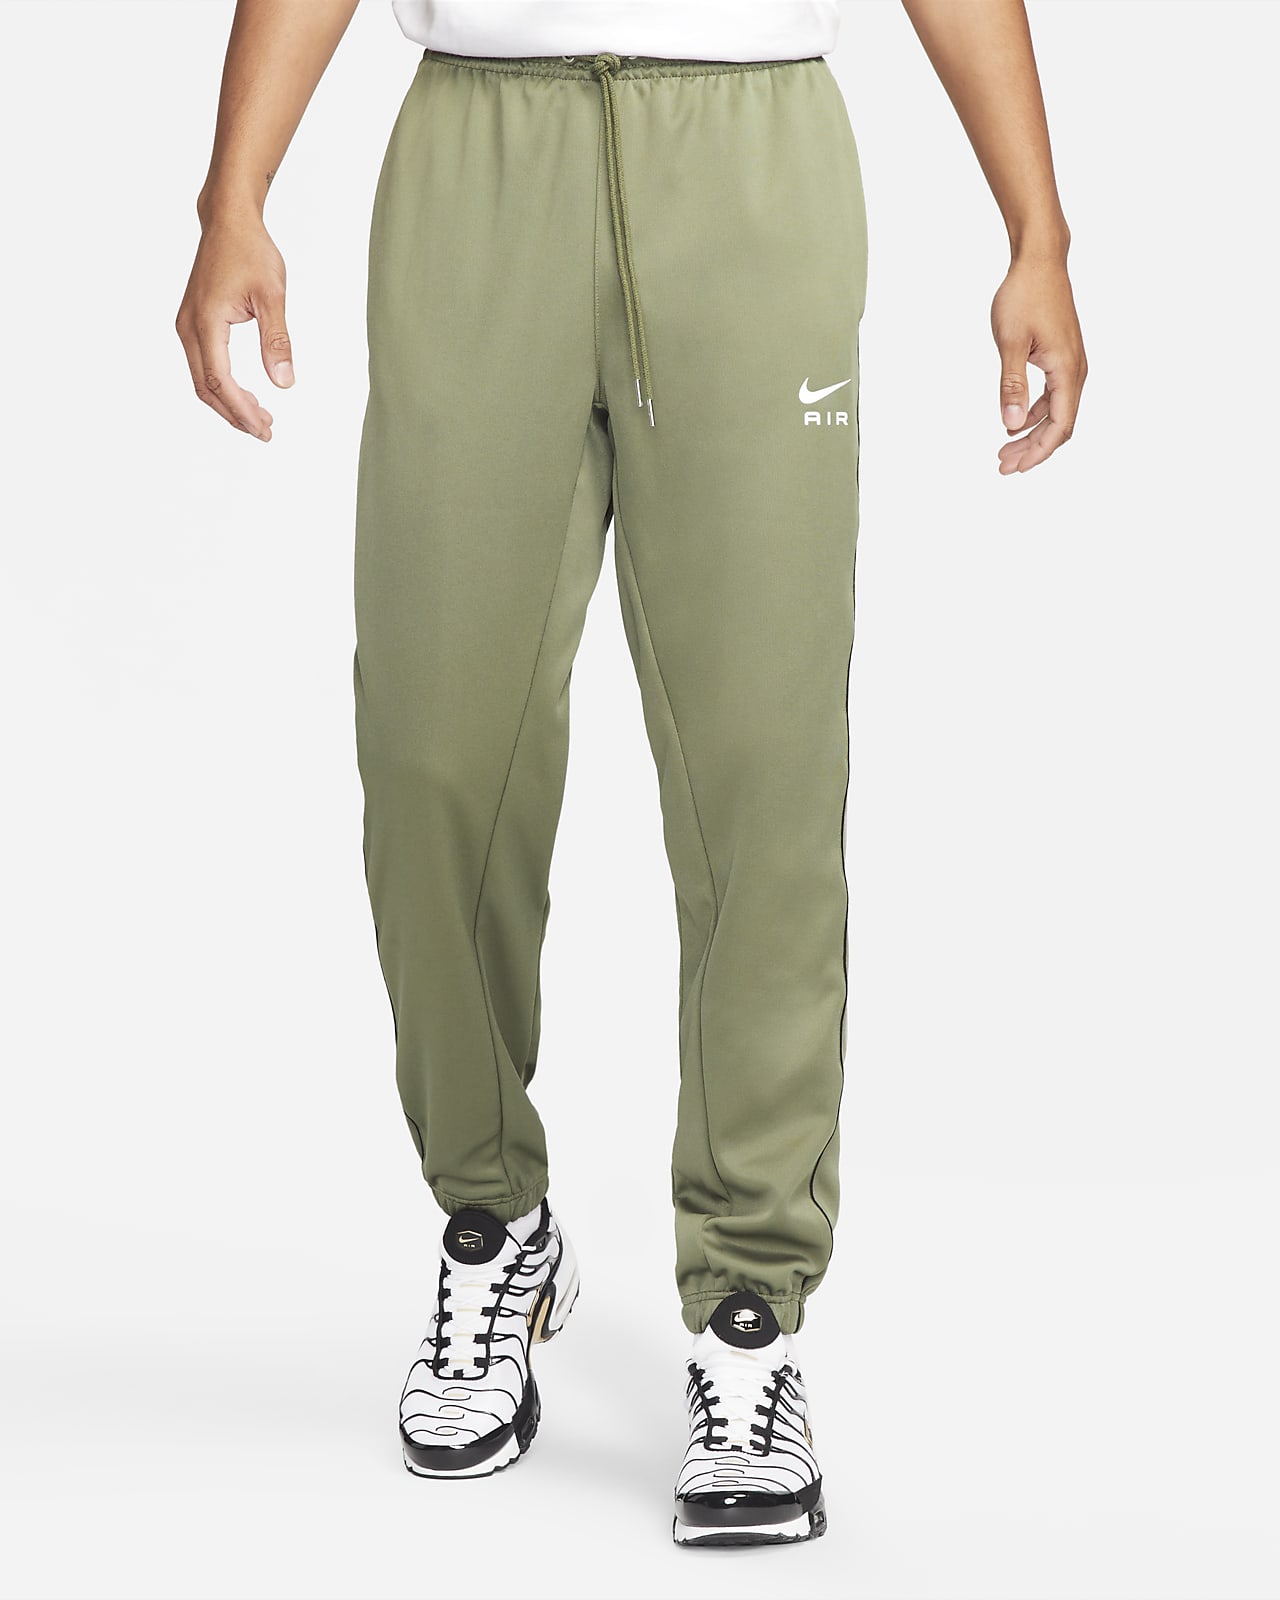 Nike Sportswear Air Men's Poly-Knit Trousers. Nike HR